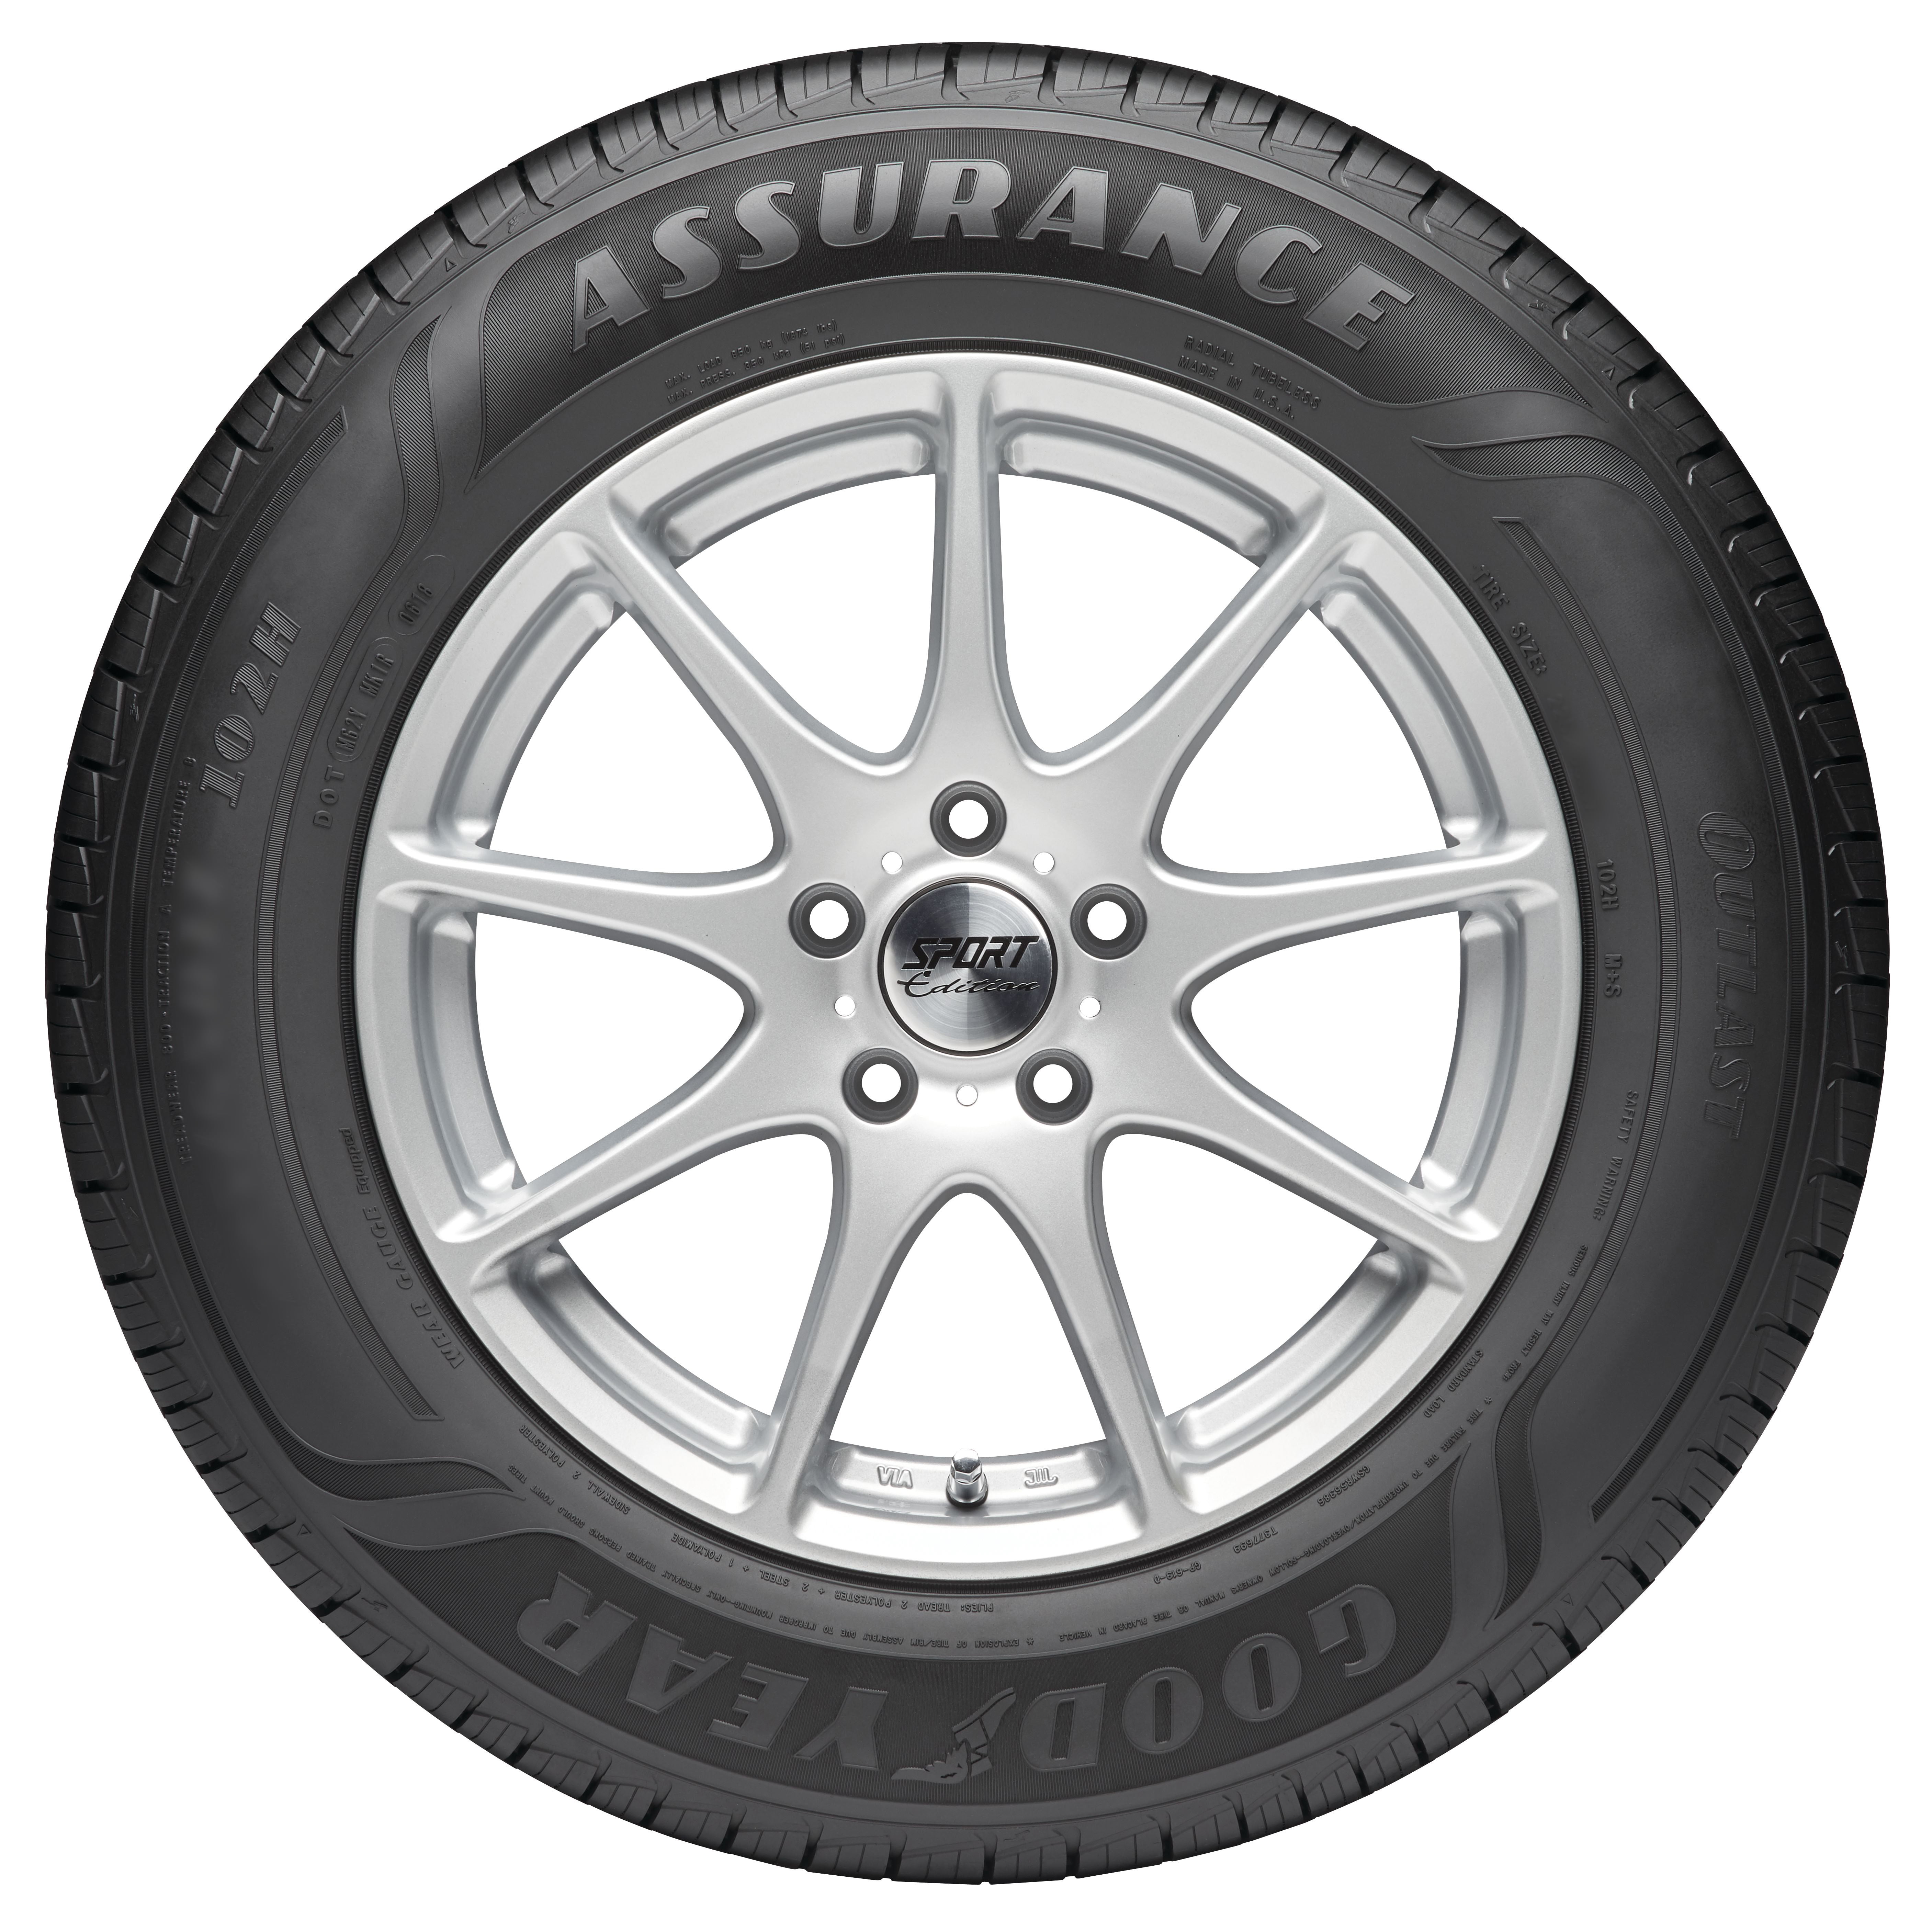 Goodyear Assurance Outlast 215/60R16 95V All-Season Tire - image 2 of 7